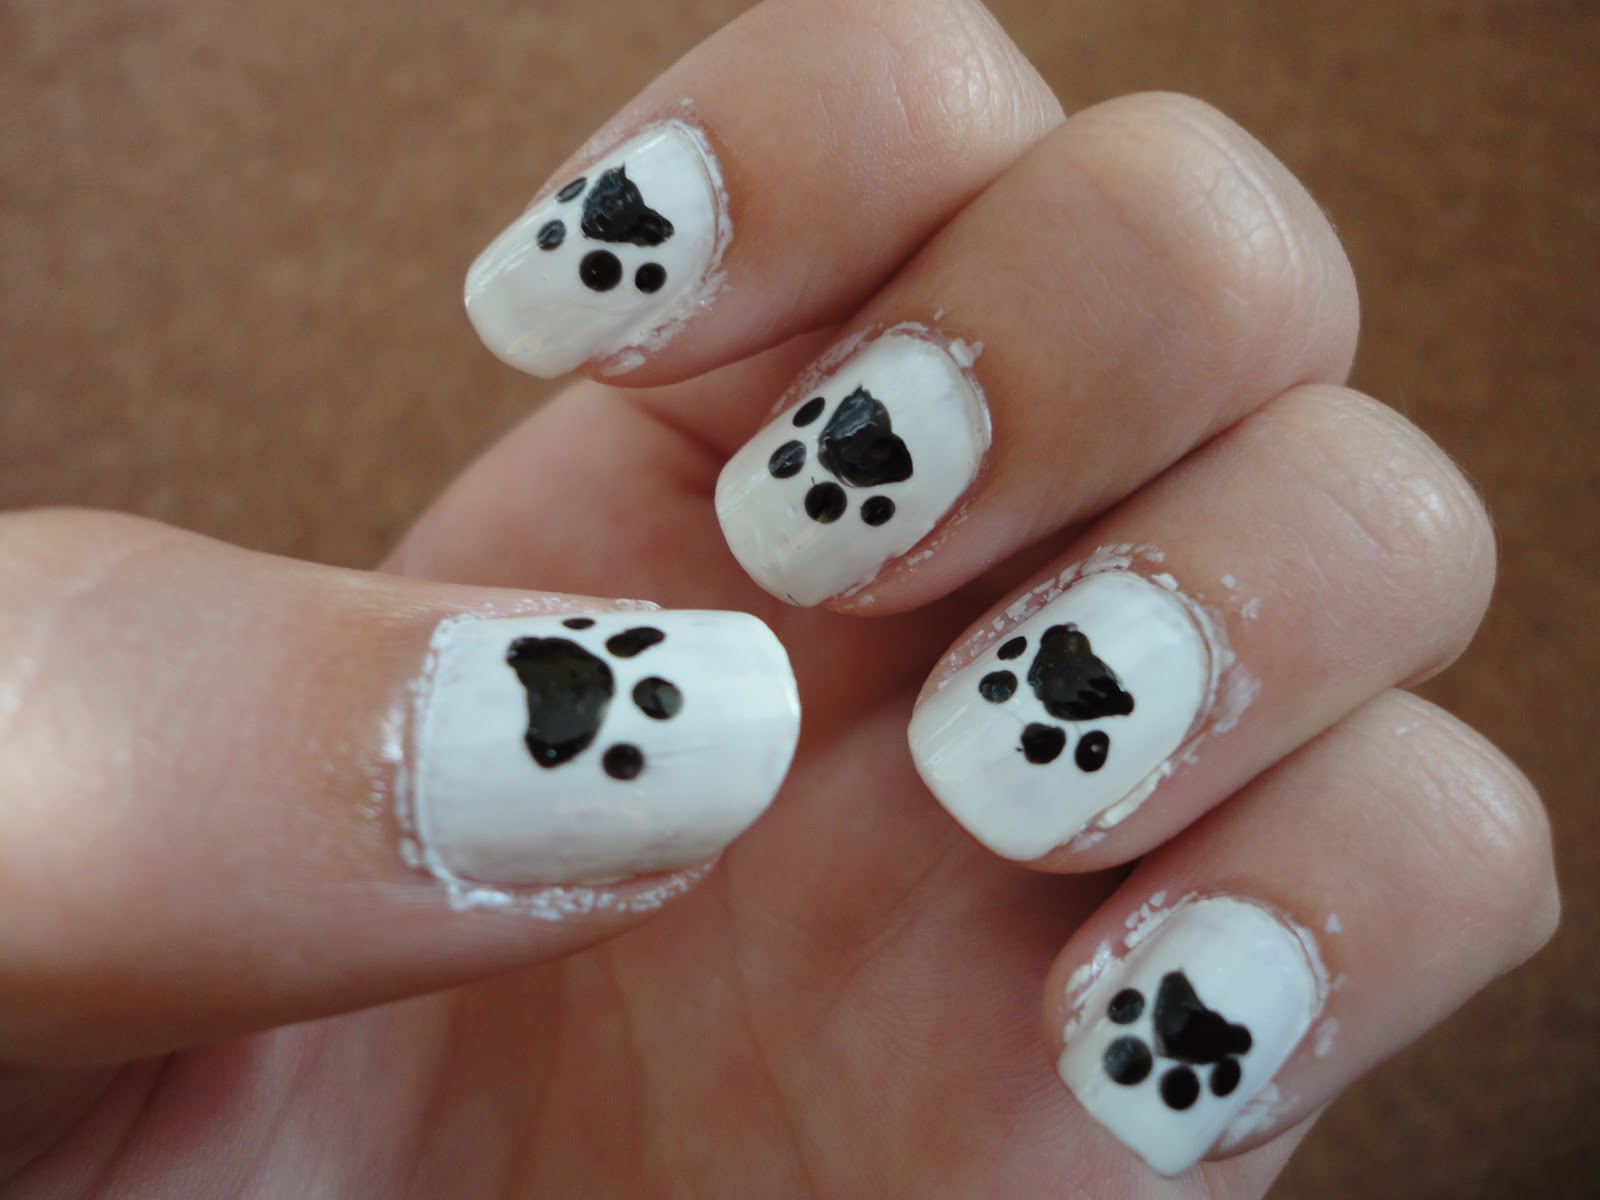 4. Cute Paw Print Nails - wide 2